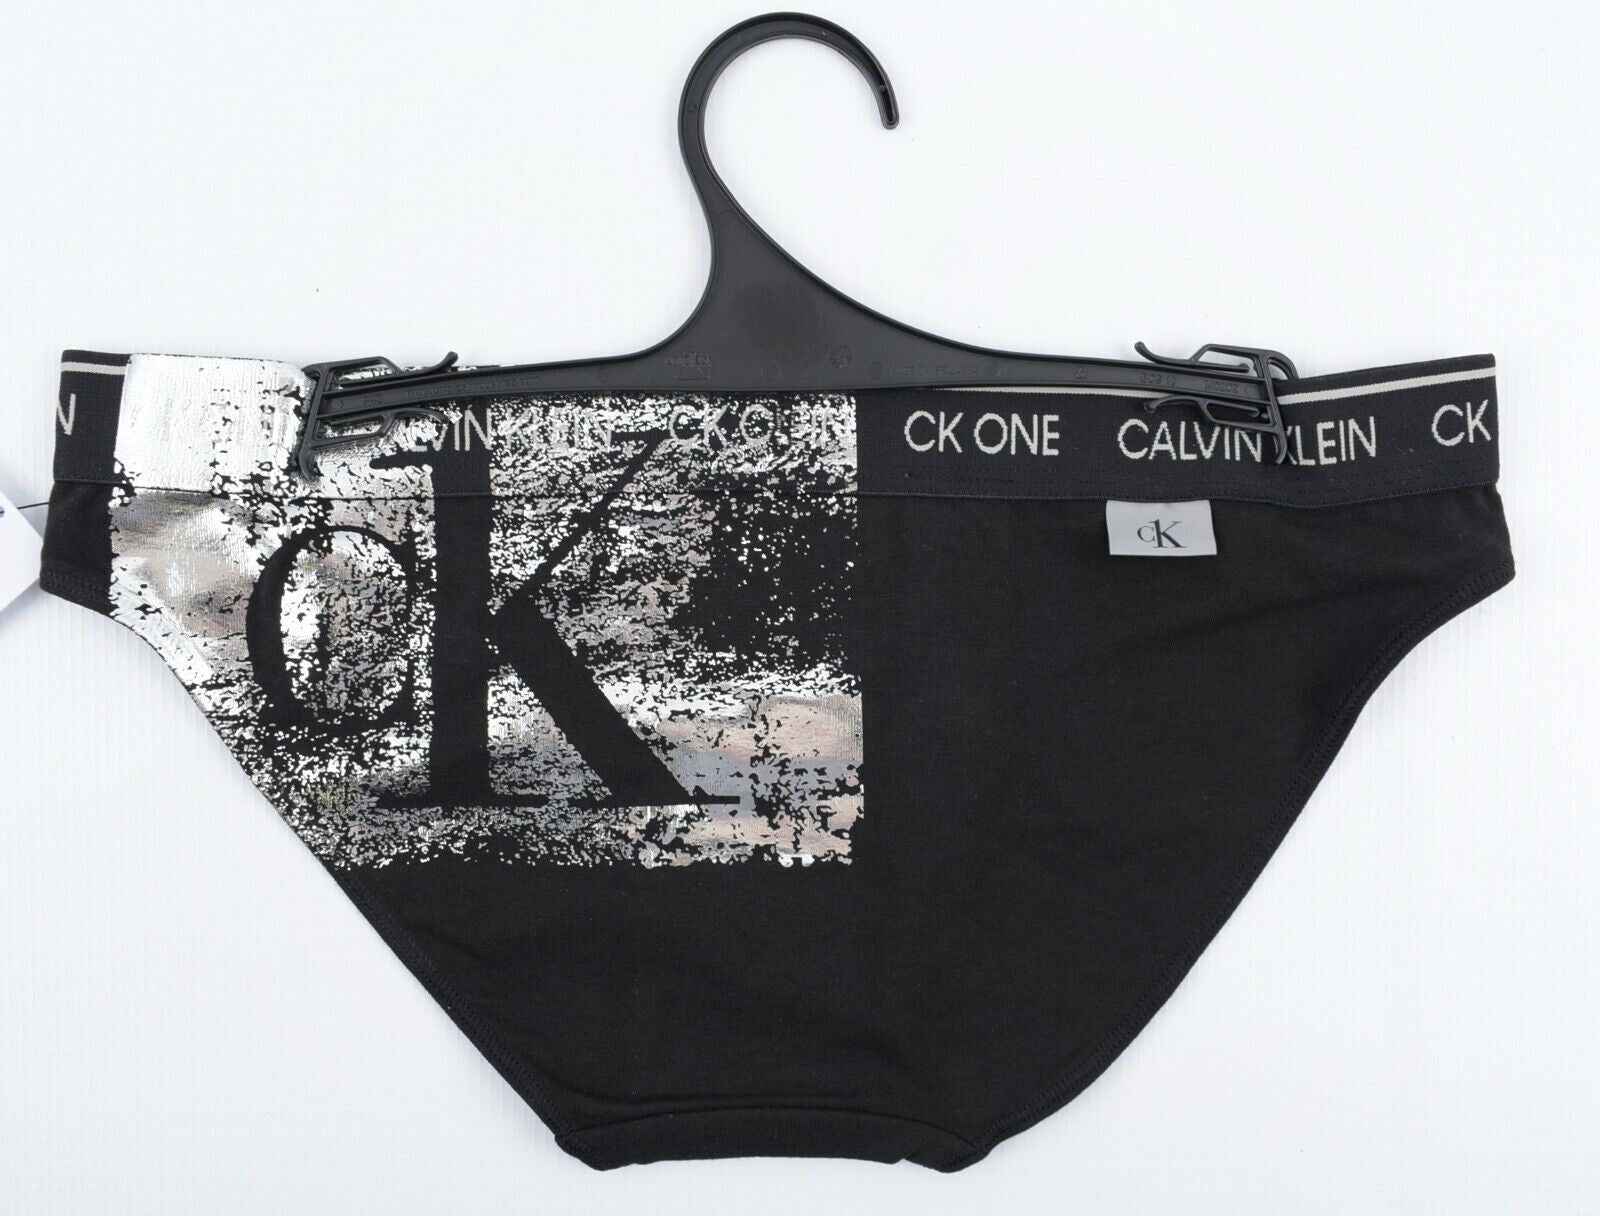 CALVIN KLEIN Underwear: CK ONE Women's Foil Bikini Briefs, Black, size XS (UK 8)